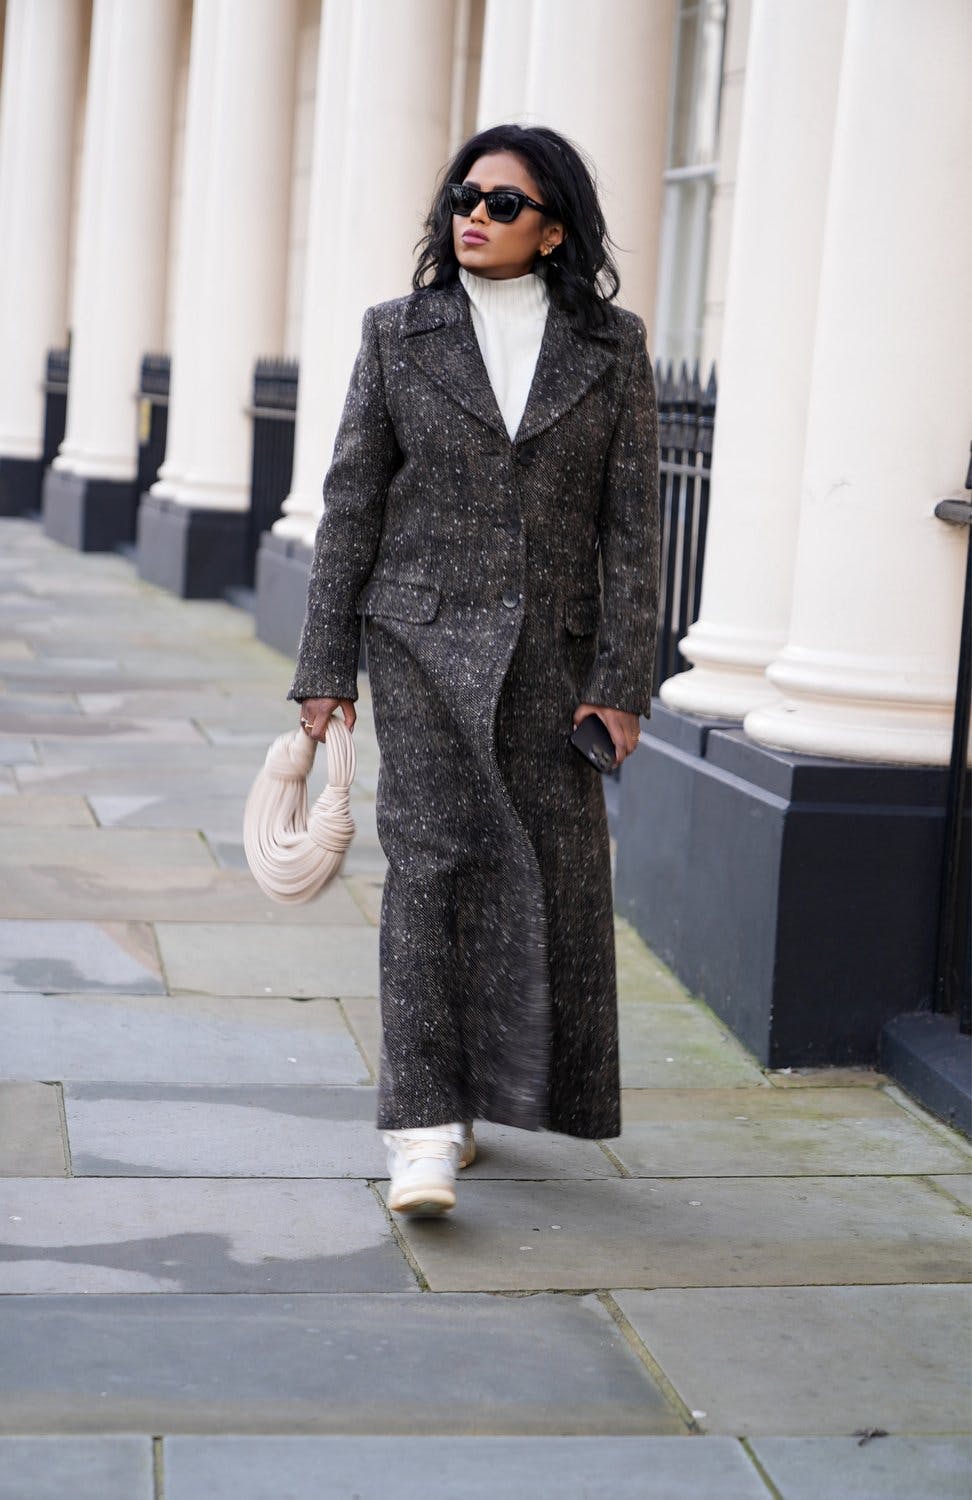 Sachini Dilanka wearing a Long Herringbone Wool Coat in London